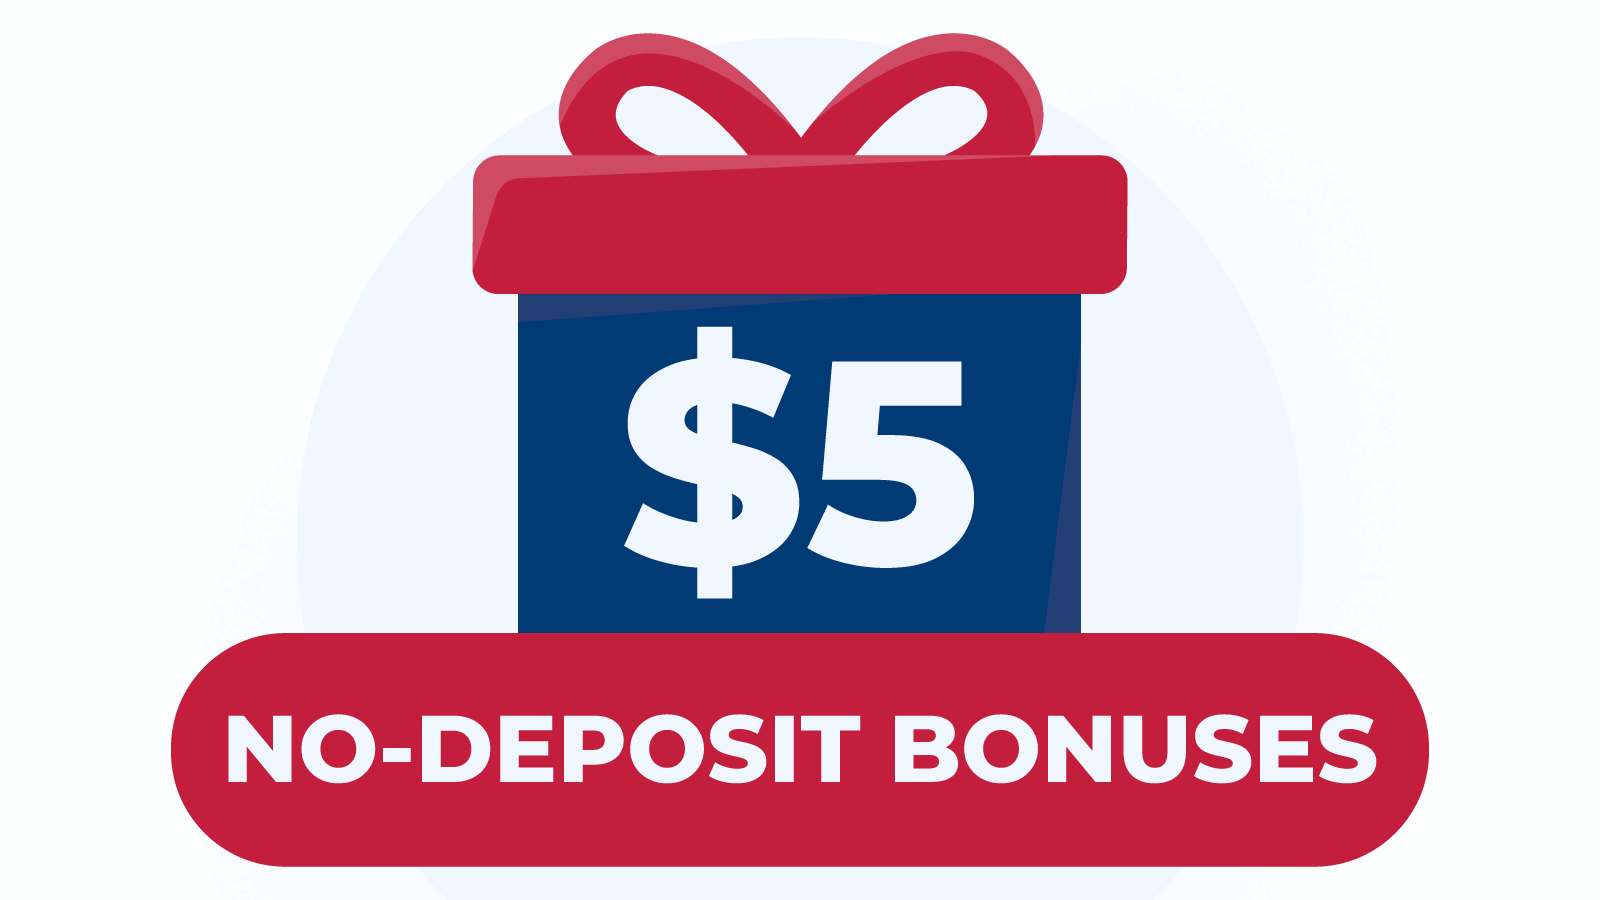 R$5 no-deposit bonuses